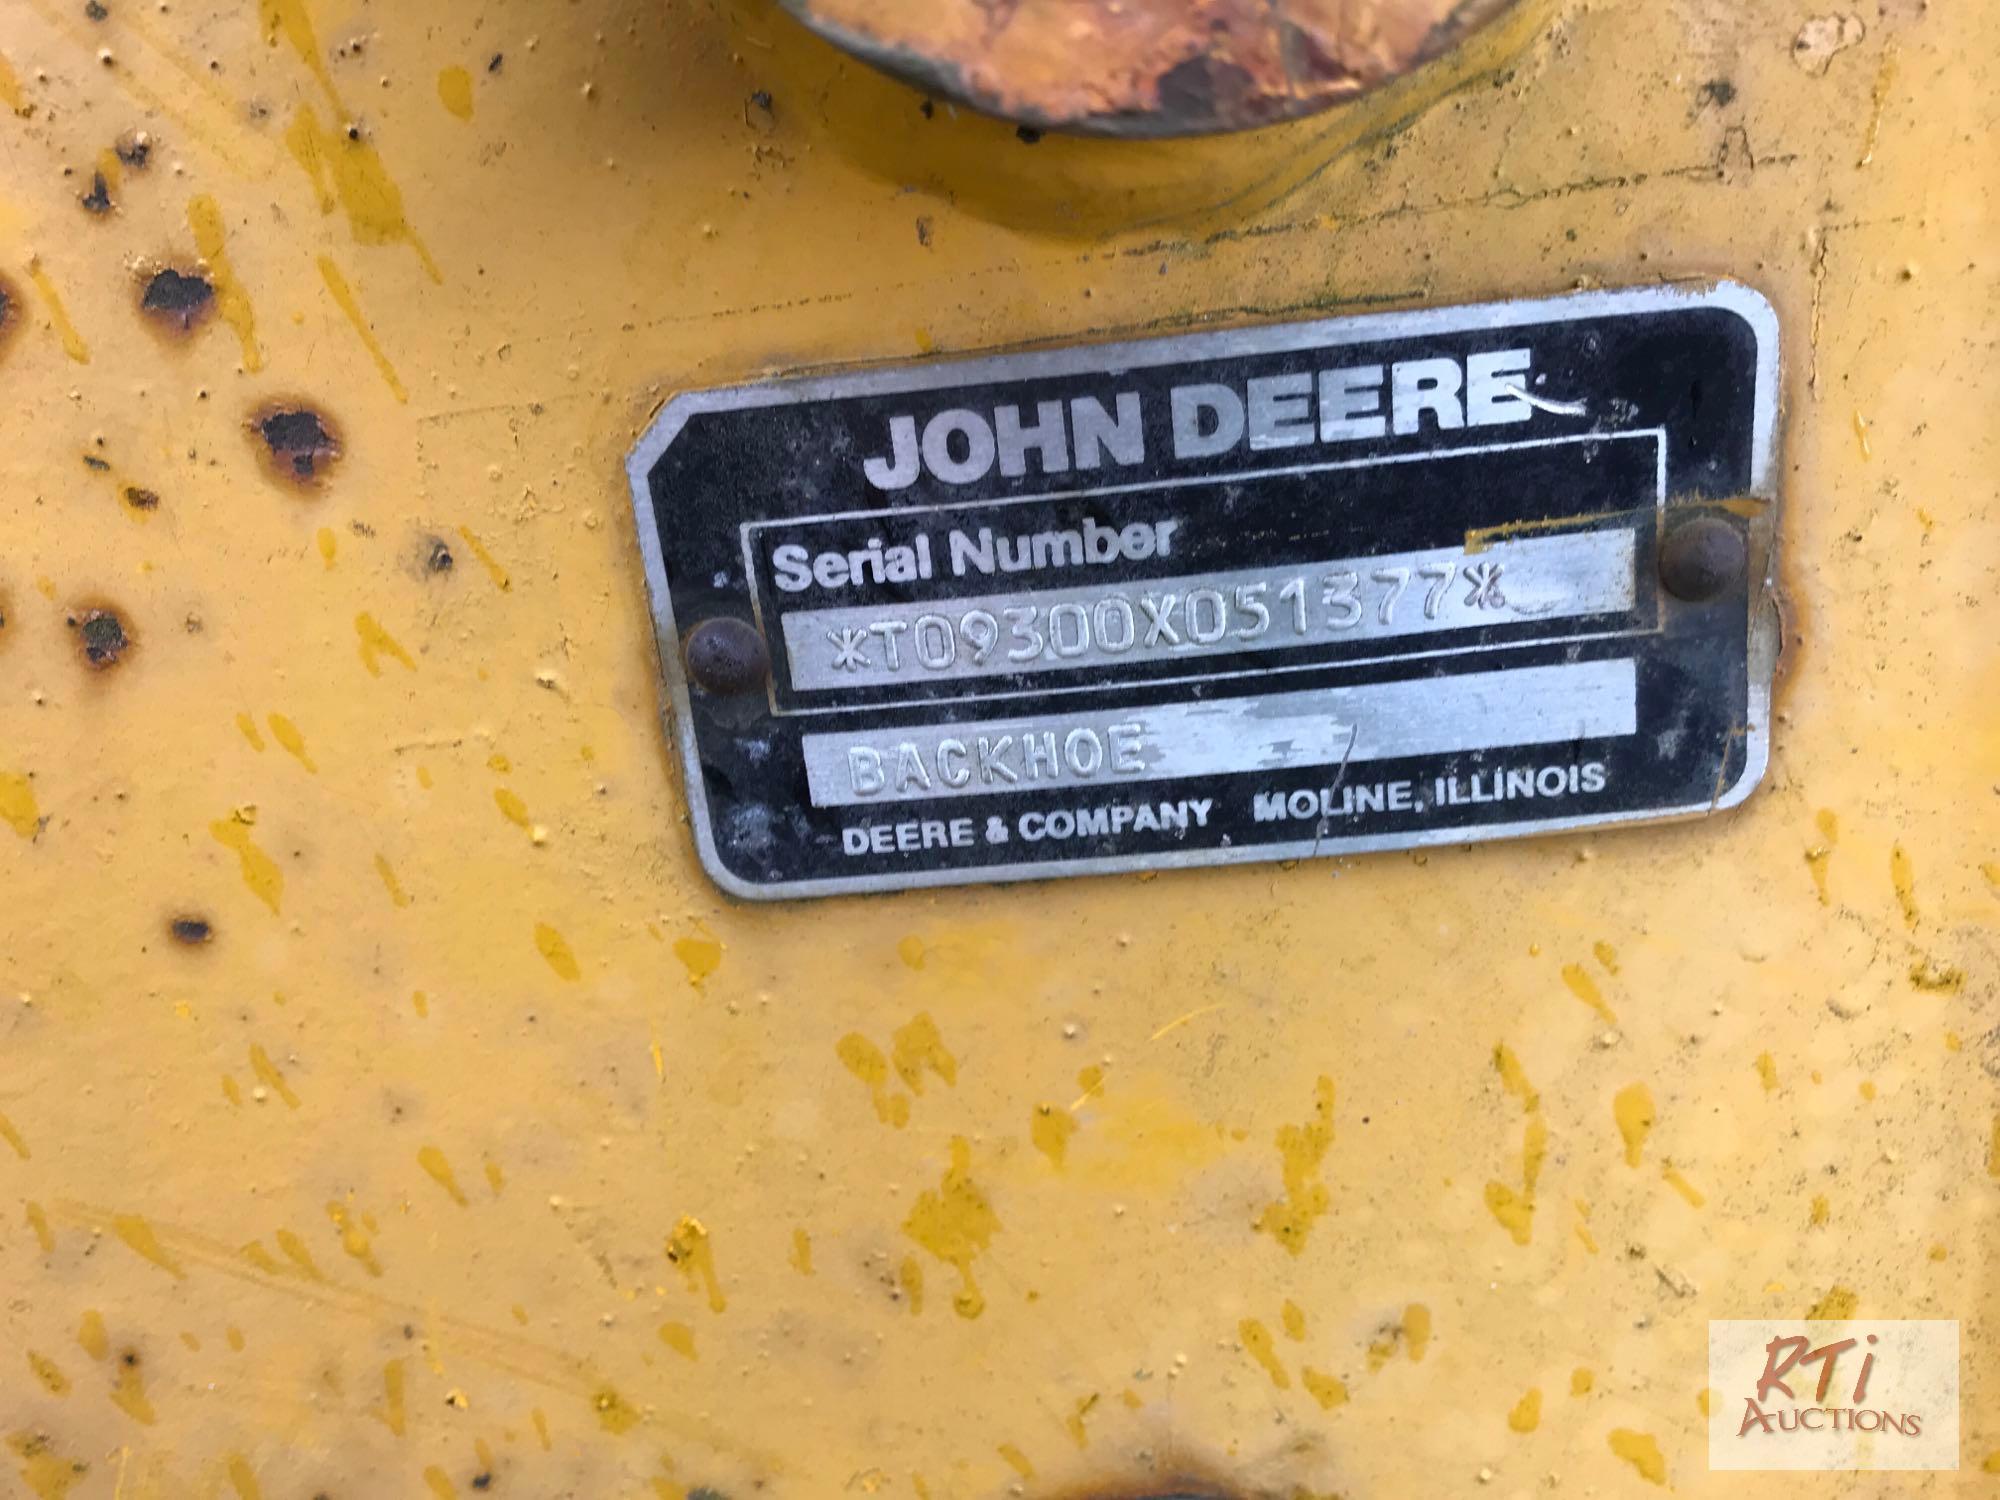 John Deere 3pt backhoe attachment